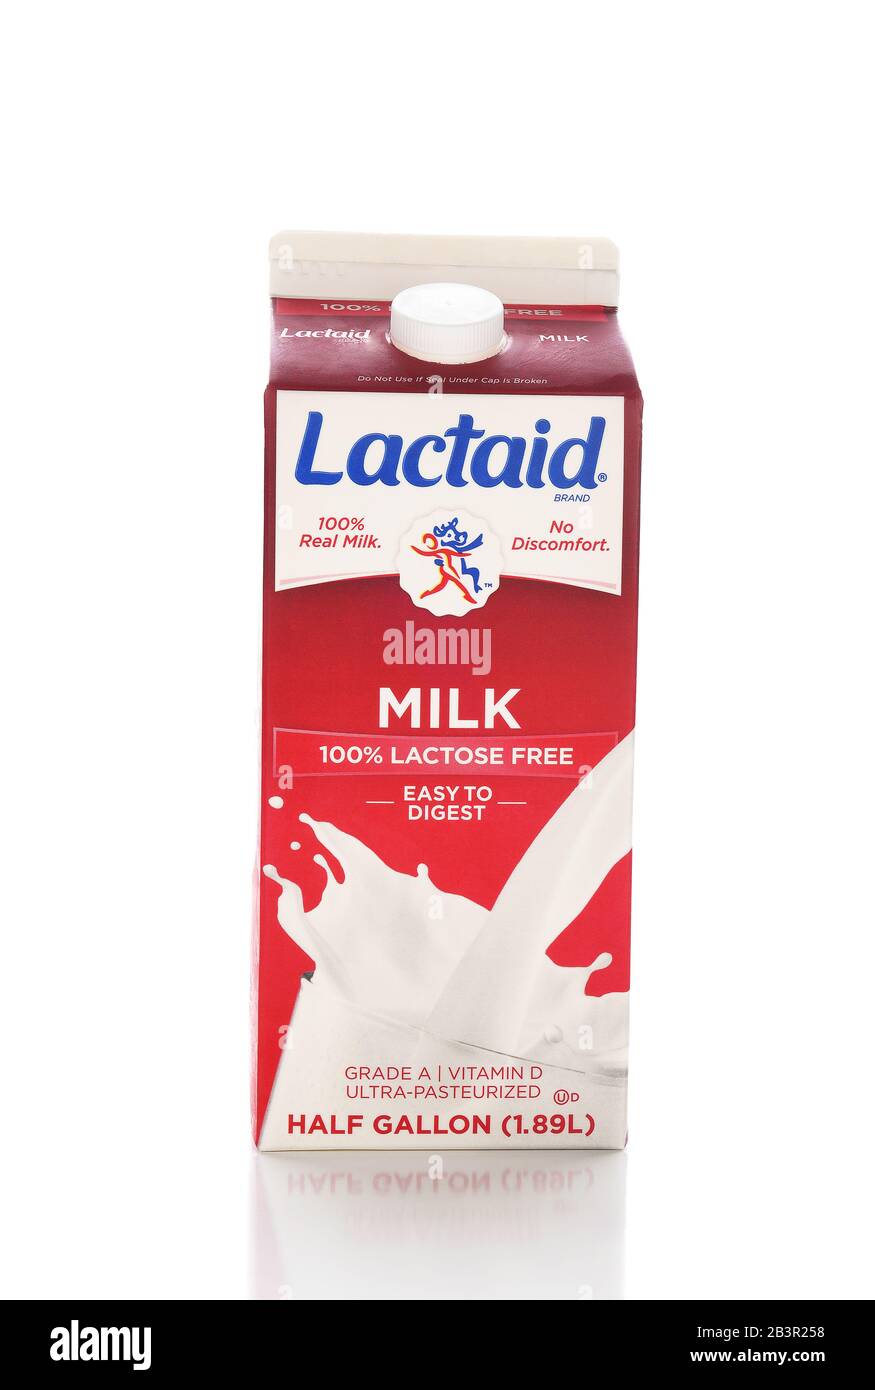 https://c8.alamy.com/comp/2B3R258/irvine-california-november-16-2016-a-half-gallon-carton-of-lactaid-lactose-free-milk-lactaid-makes-a-full-line-of-lactose-free-dairy-products-th-2B3R258.jpg